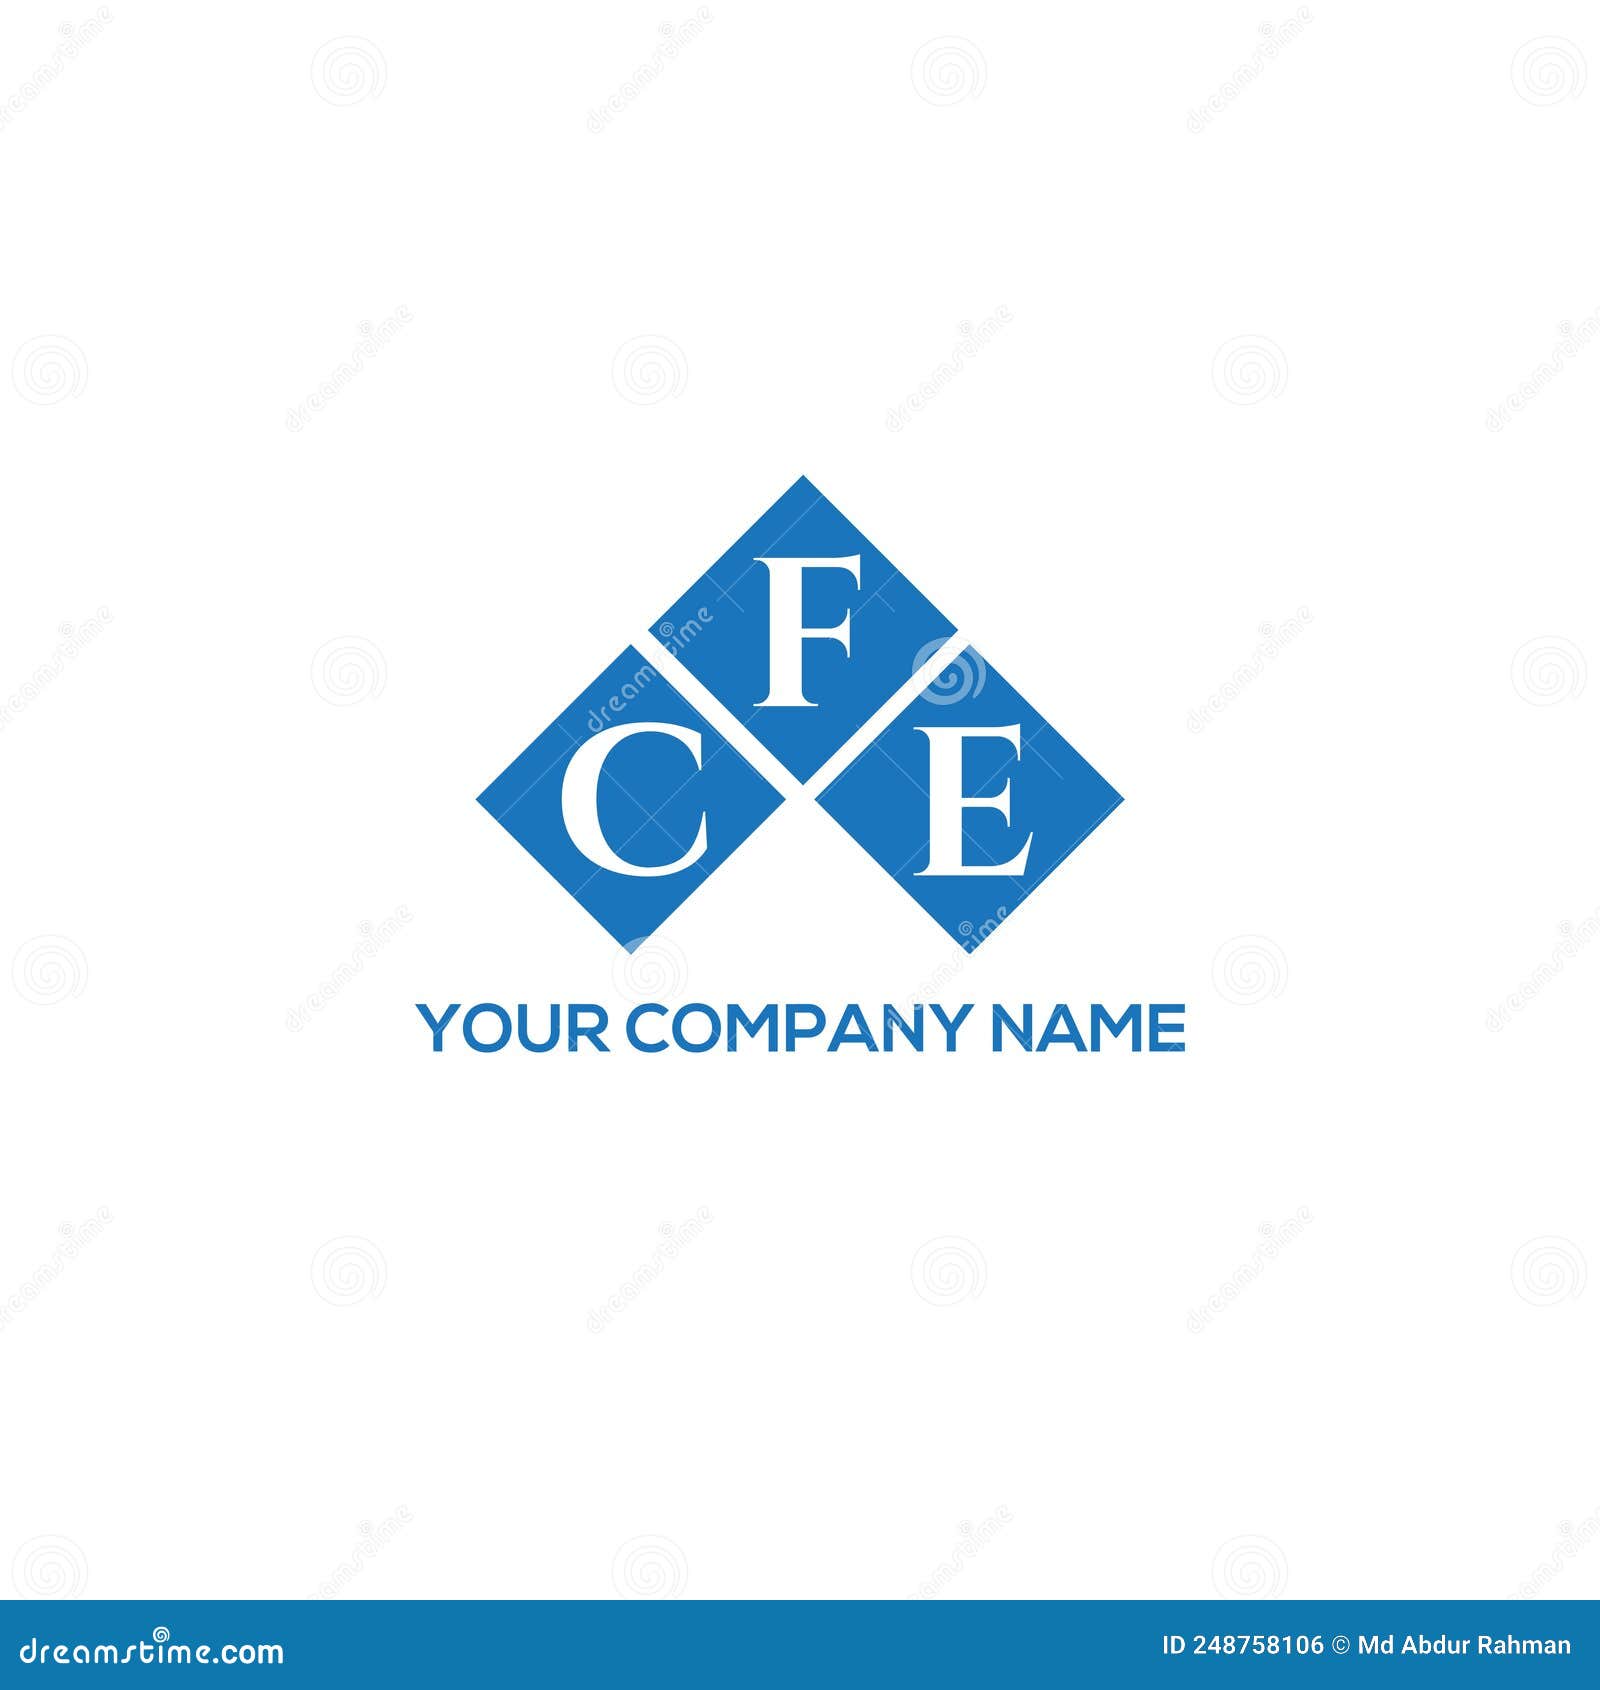 cfe letter logo  on black background. cfe creative initials letter logo concept. cfe letter .cfe letter logo  on